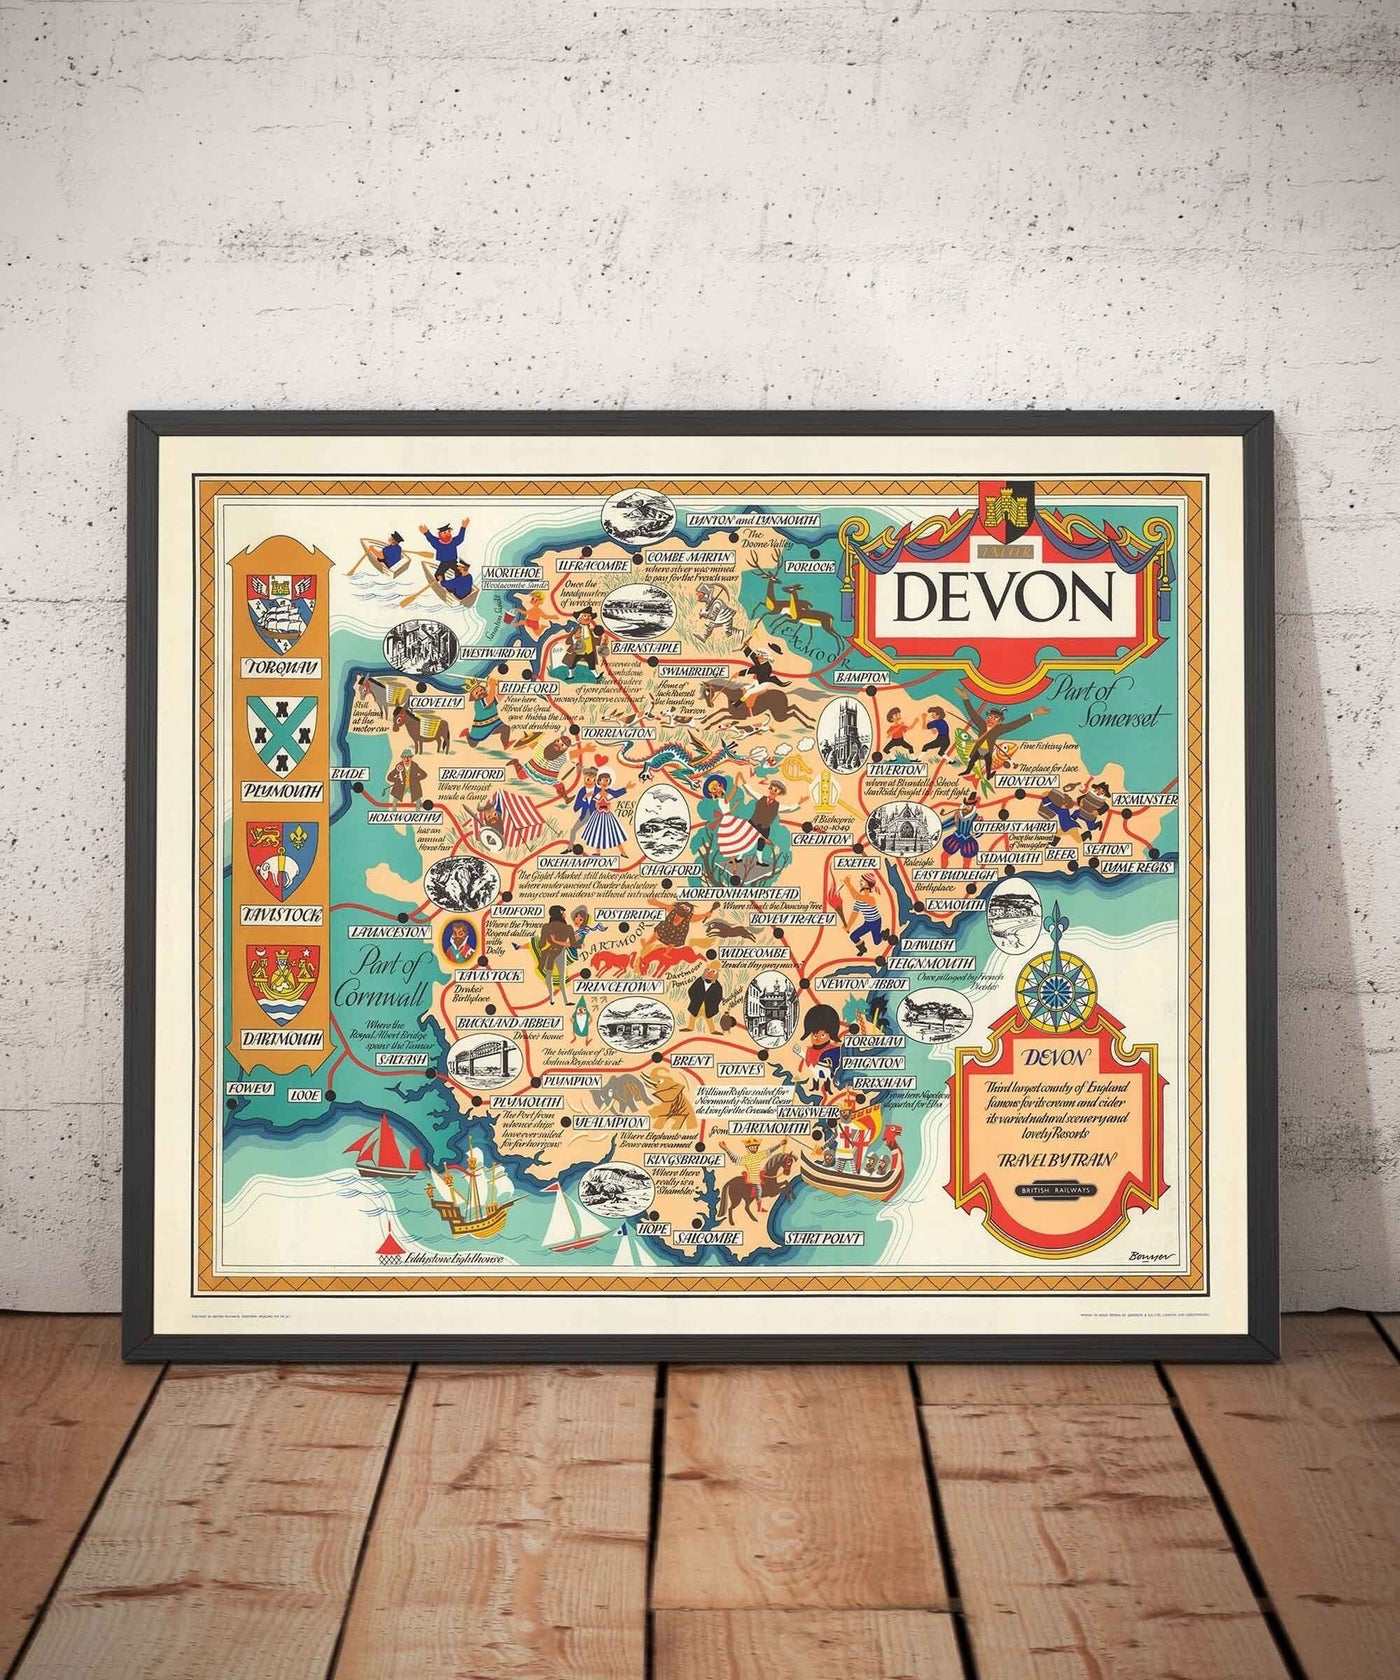 Antiguo mapa pictórico de Devon, 1950 por Bowyer - Ferrocarril británico, Torquay, Torrington, Clovelly, West Country